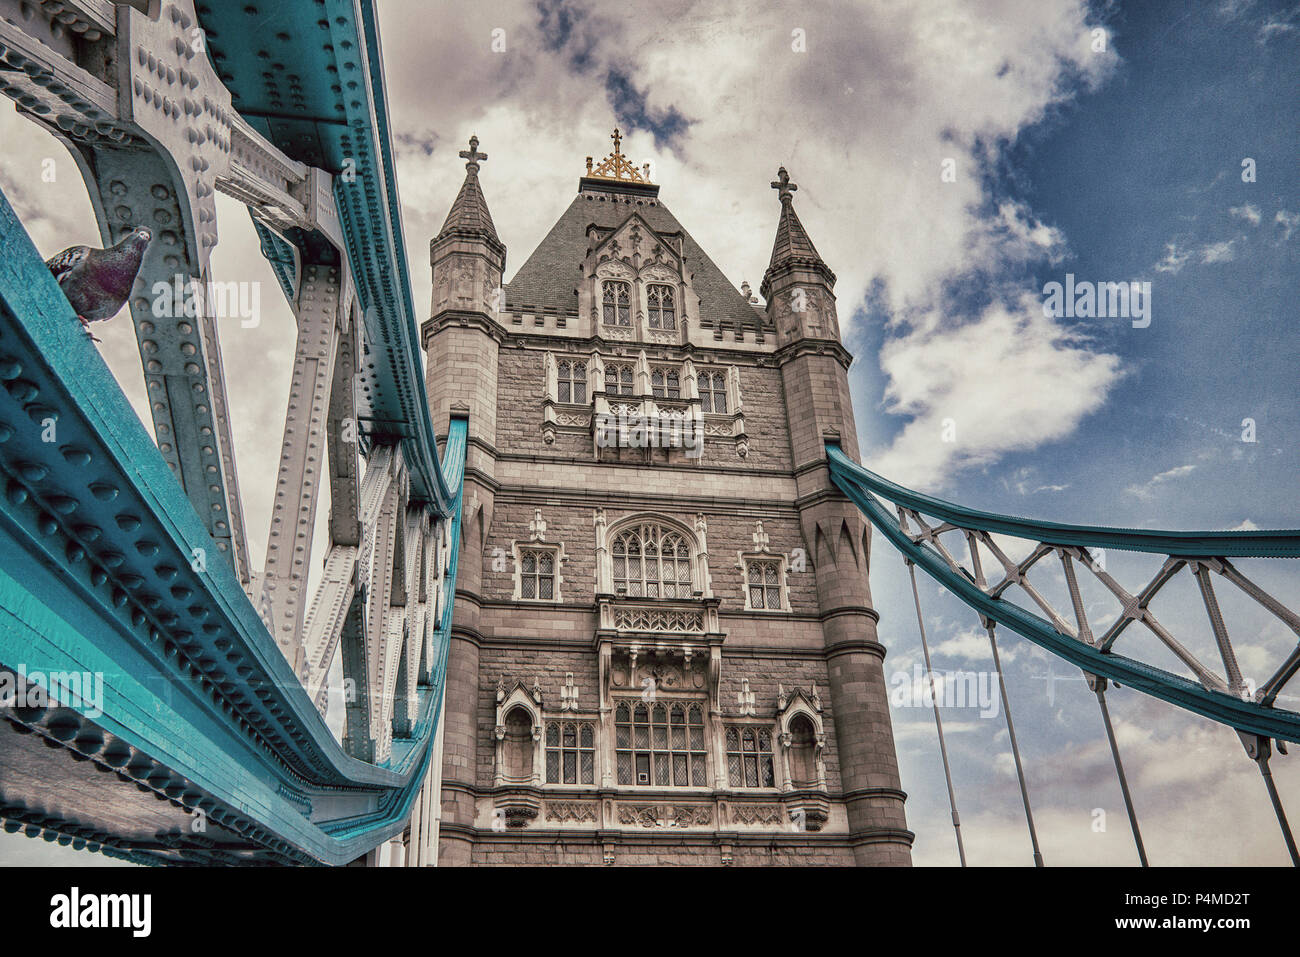 London towerbridge Stock Photo